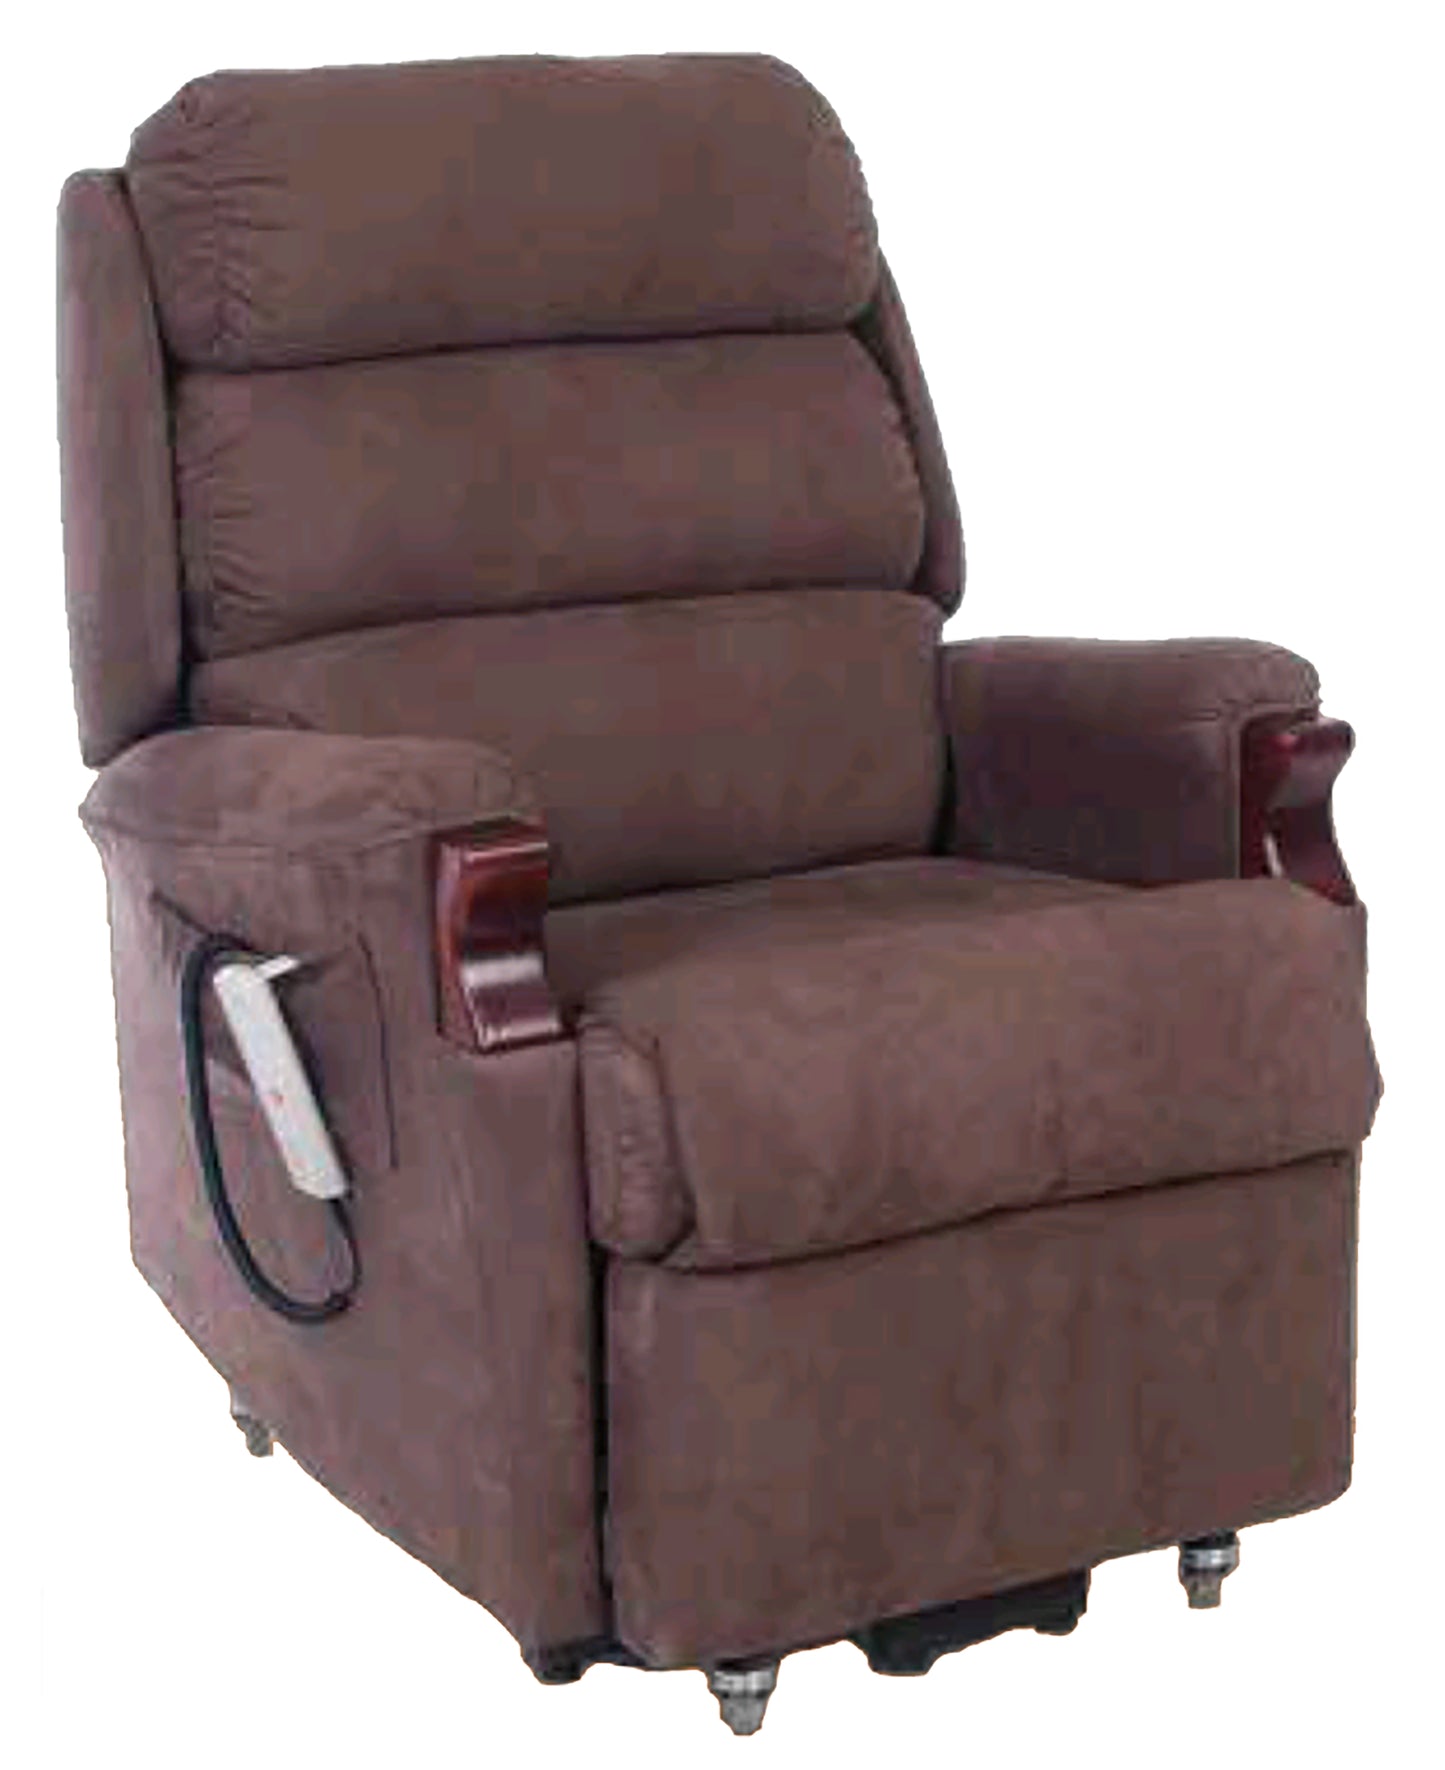 Barwon B - Single Motor Recliner/Lift Chair